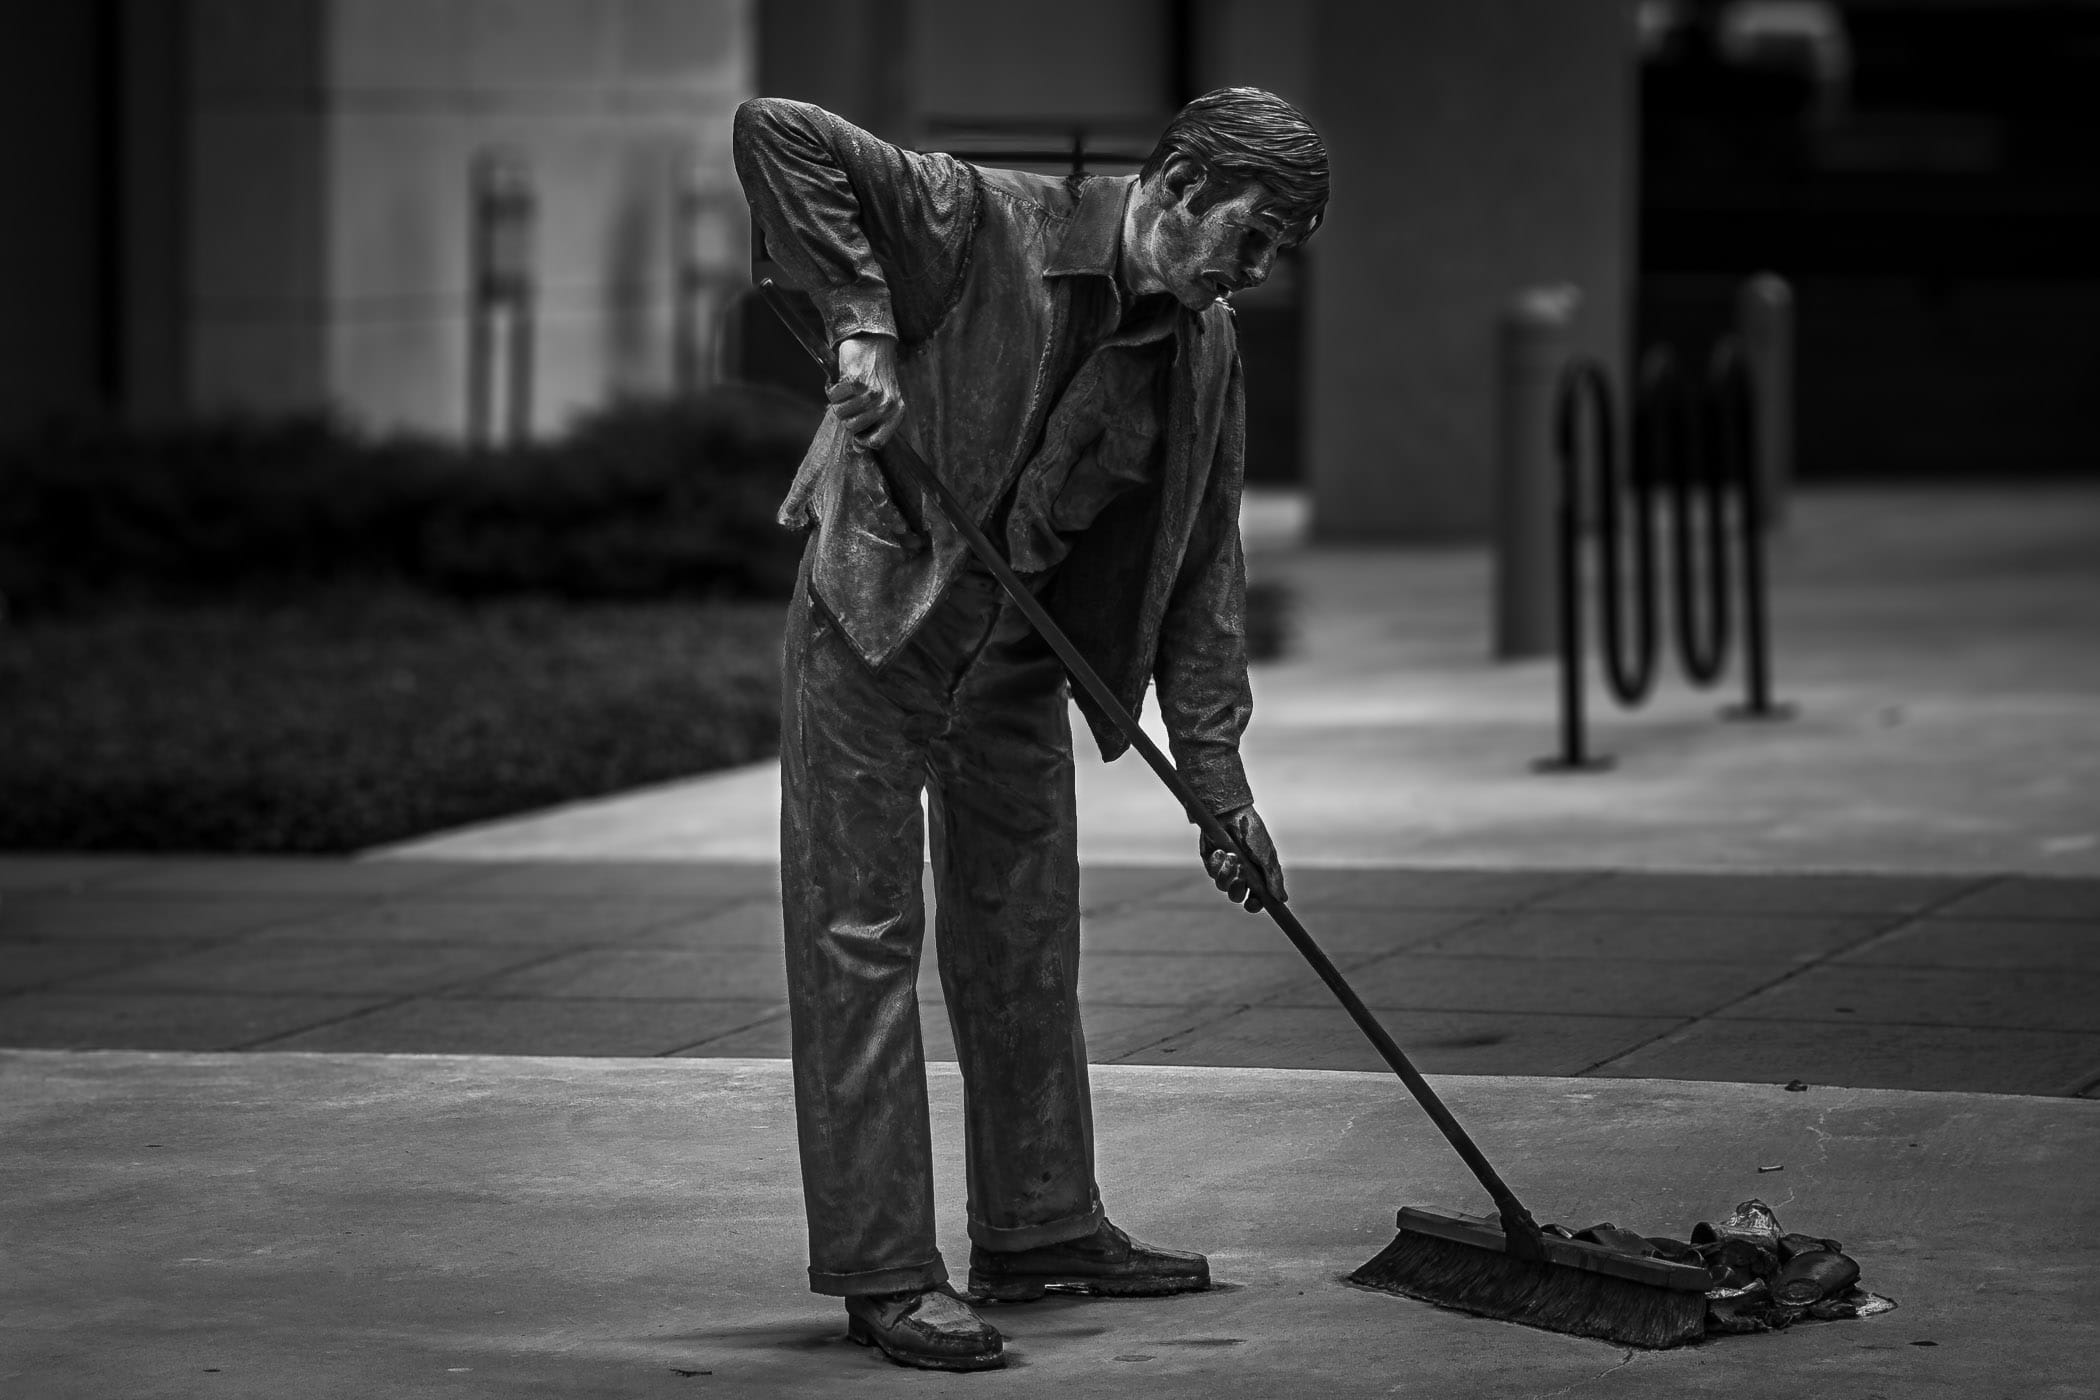 John Seward Johnson, Jr.'s sculpture Aftermath of a custodian sweeping up trash in Downtown Dallas.